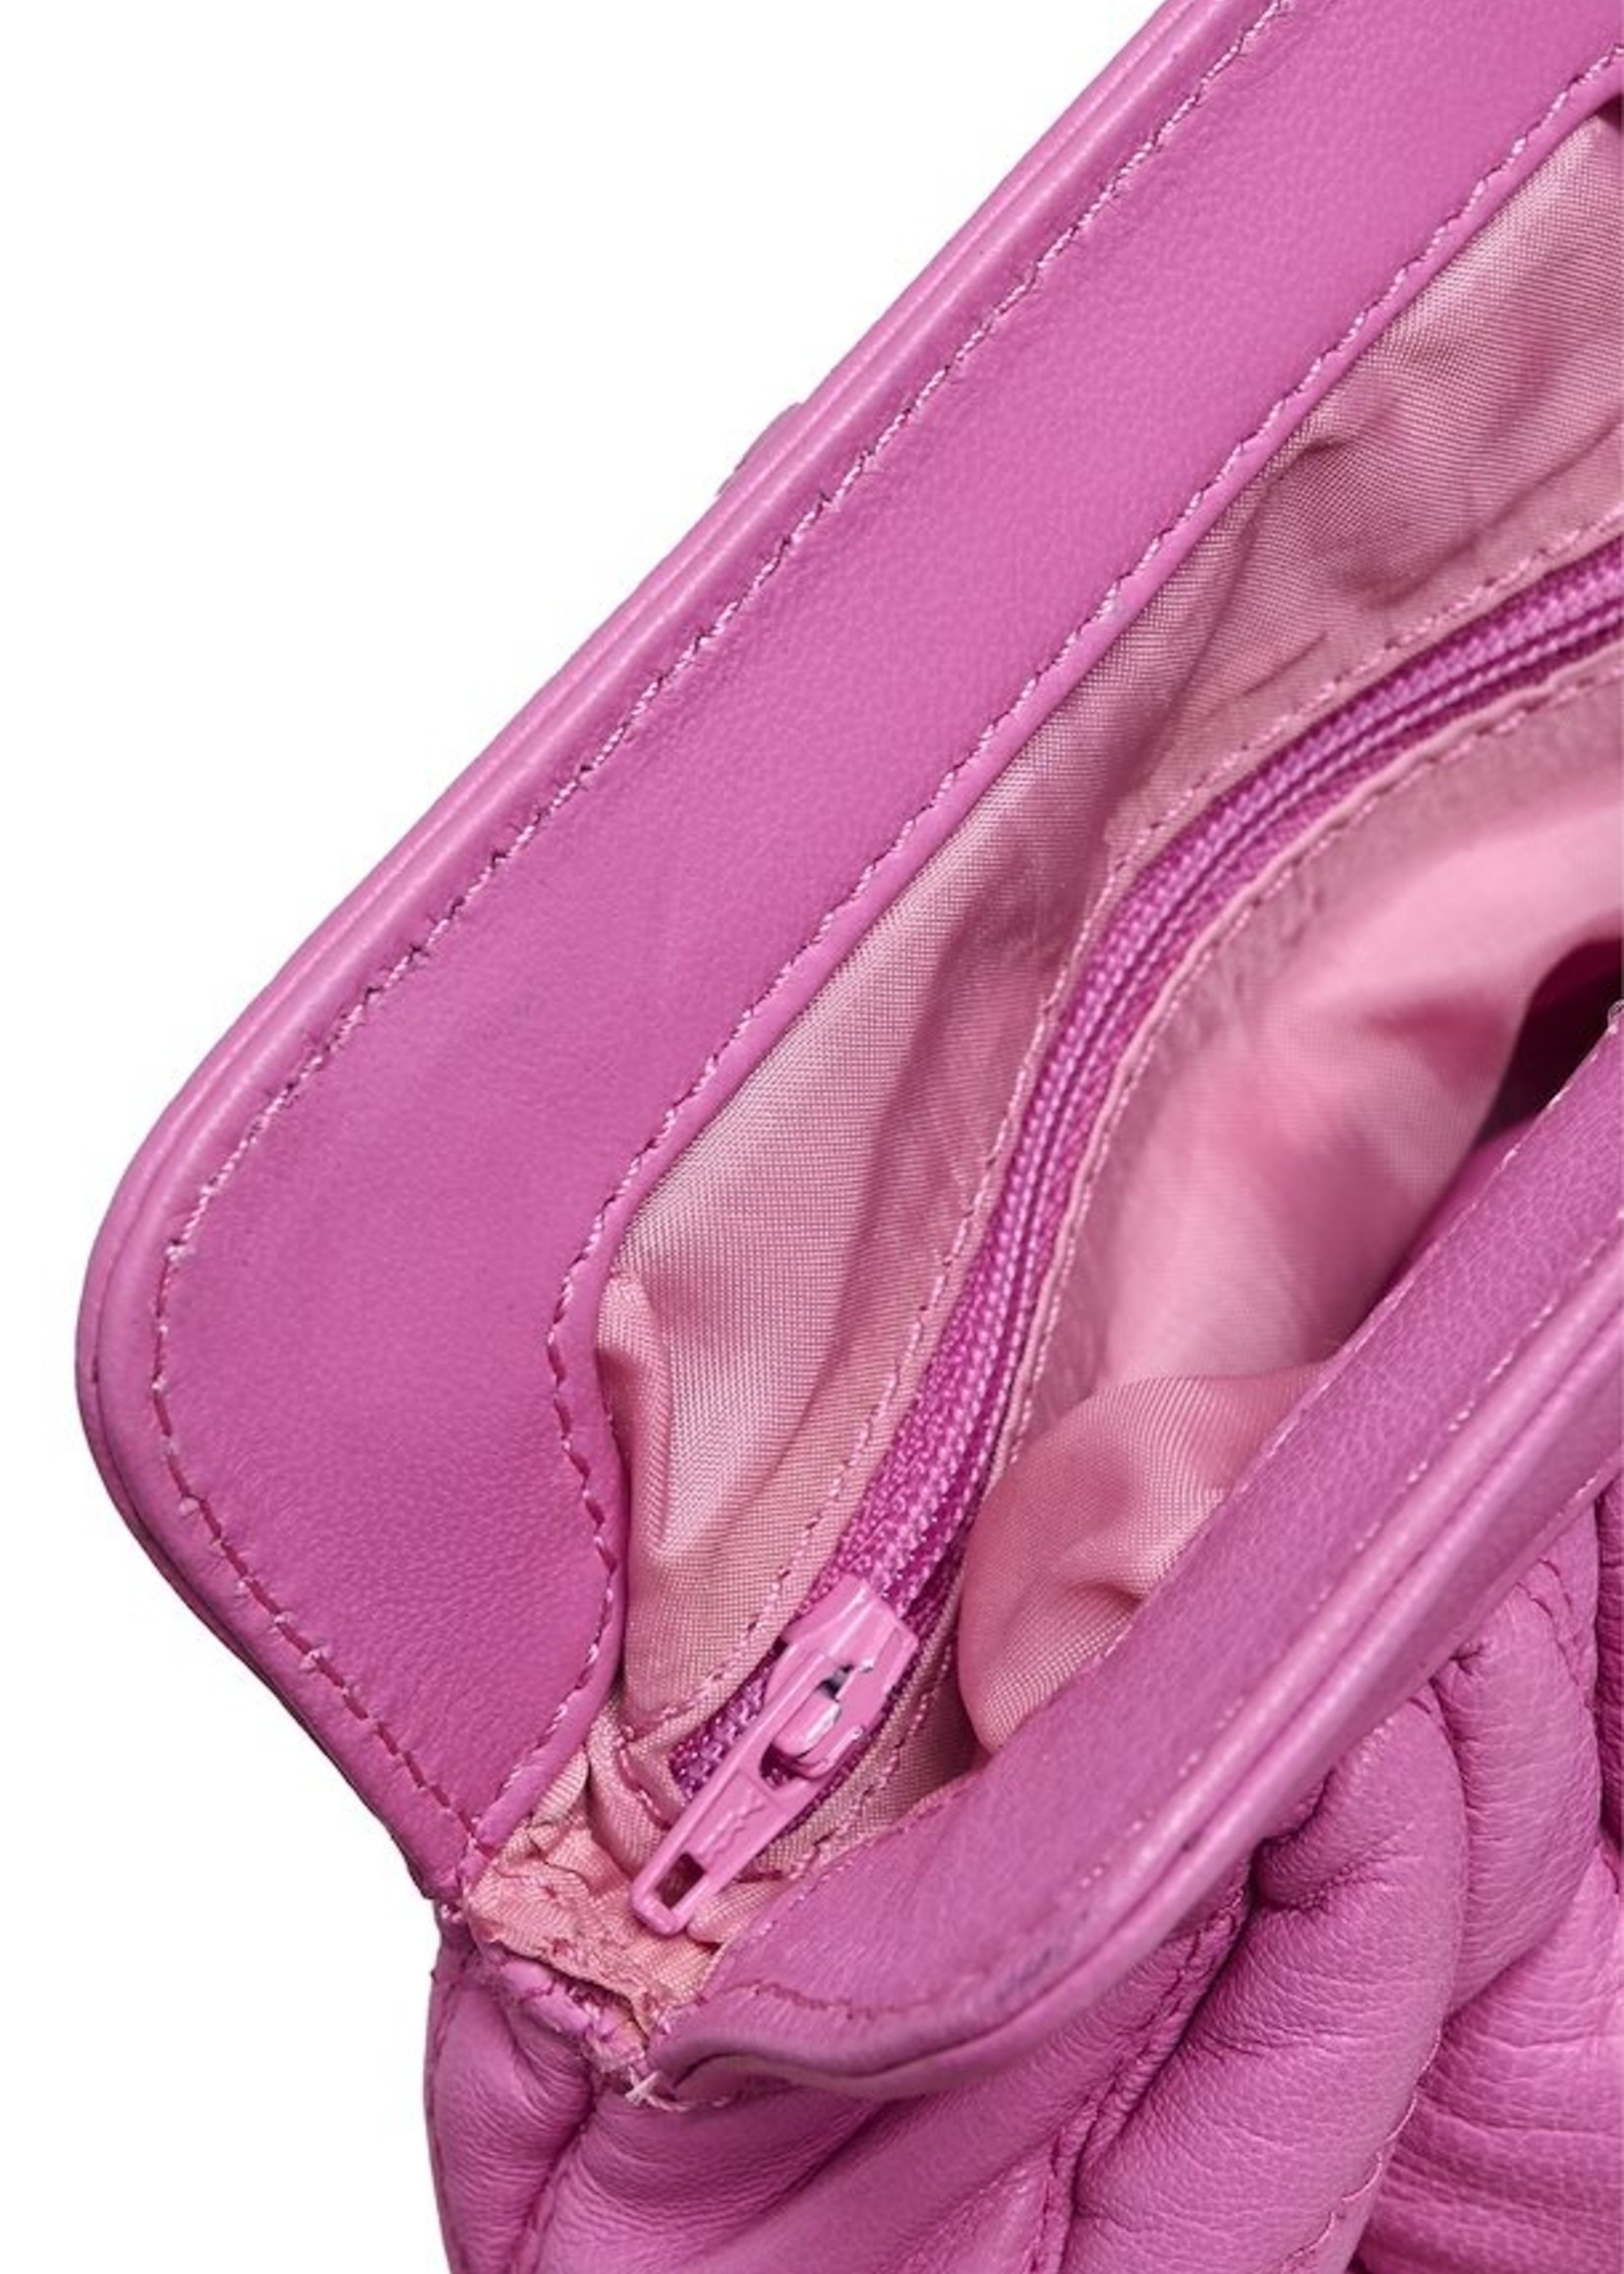 Gestuz Sunney Belted Bag - Phlox Pink